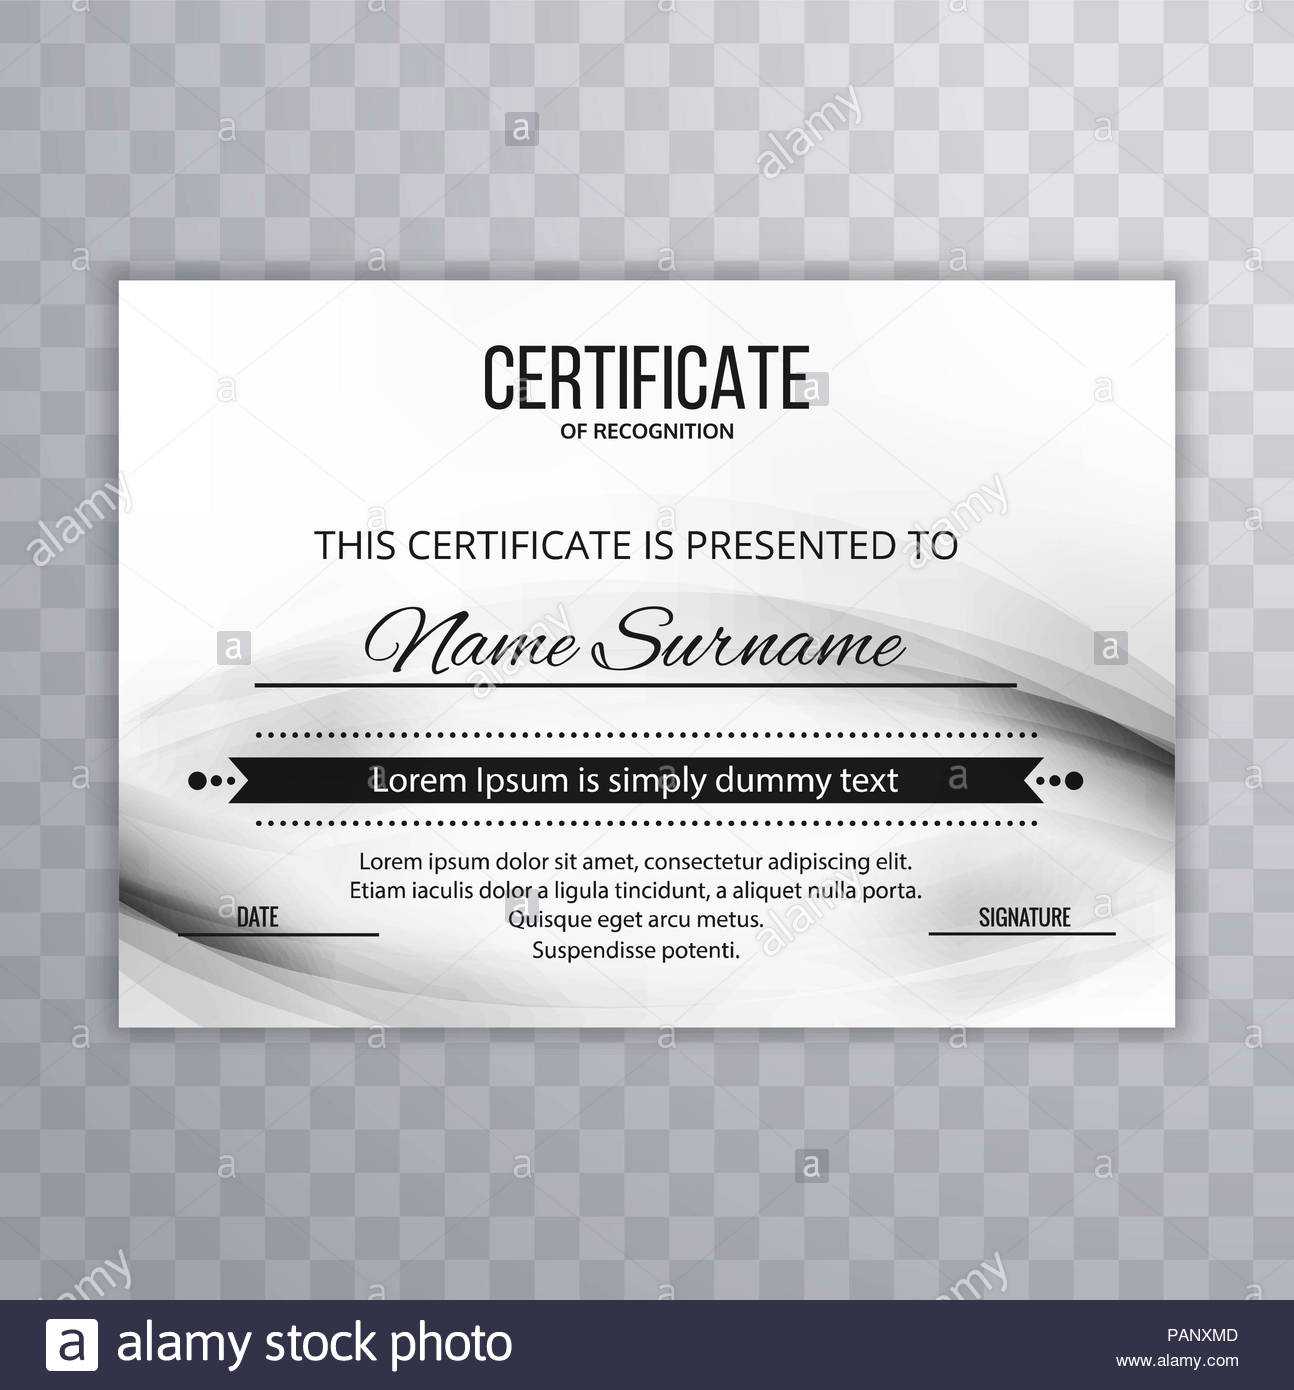 Modern Certificate Template Design Stock Photo: 213152925 For Borderless Certificate Templates